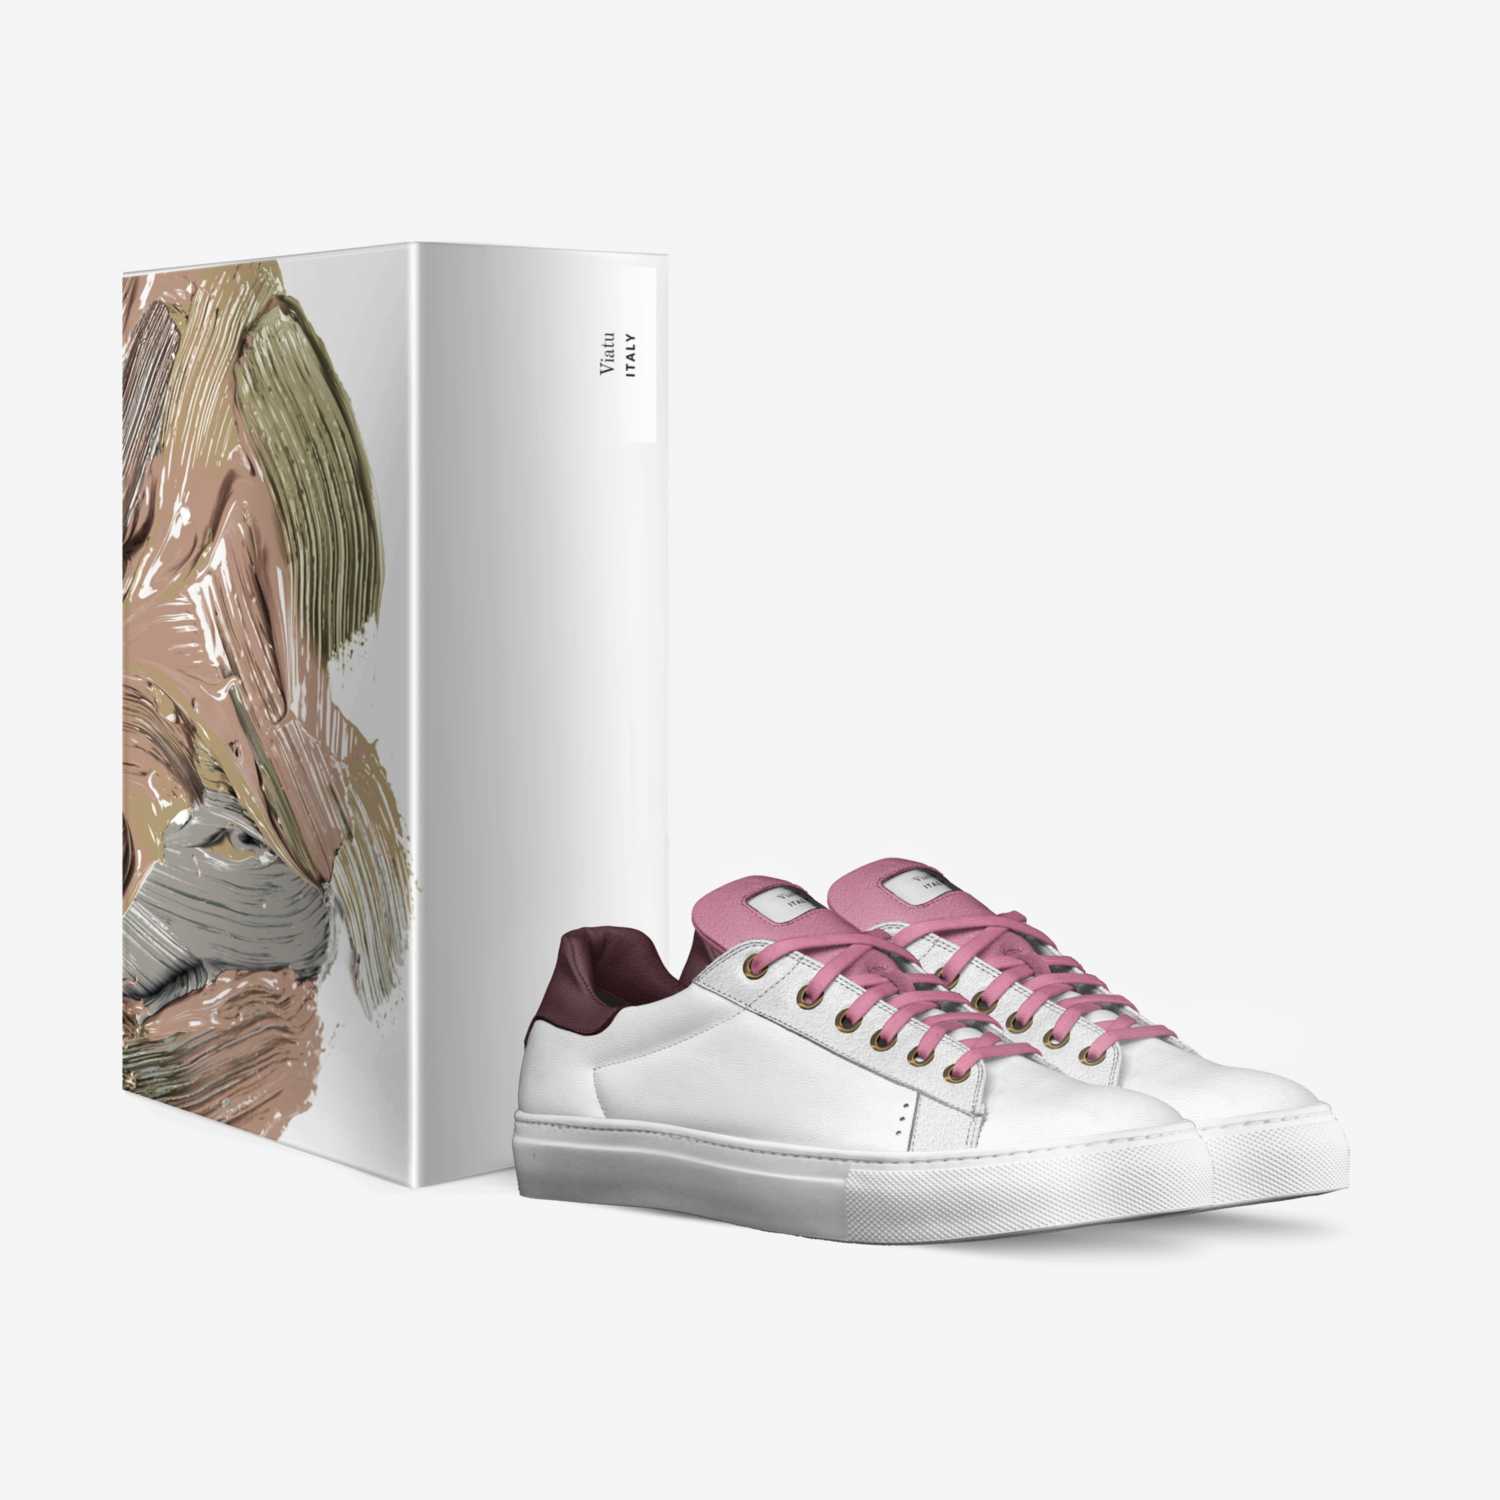 Viatu custom made in Italy shoes by Decori Lipsey | Box view